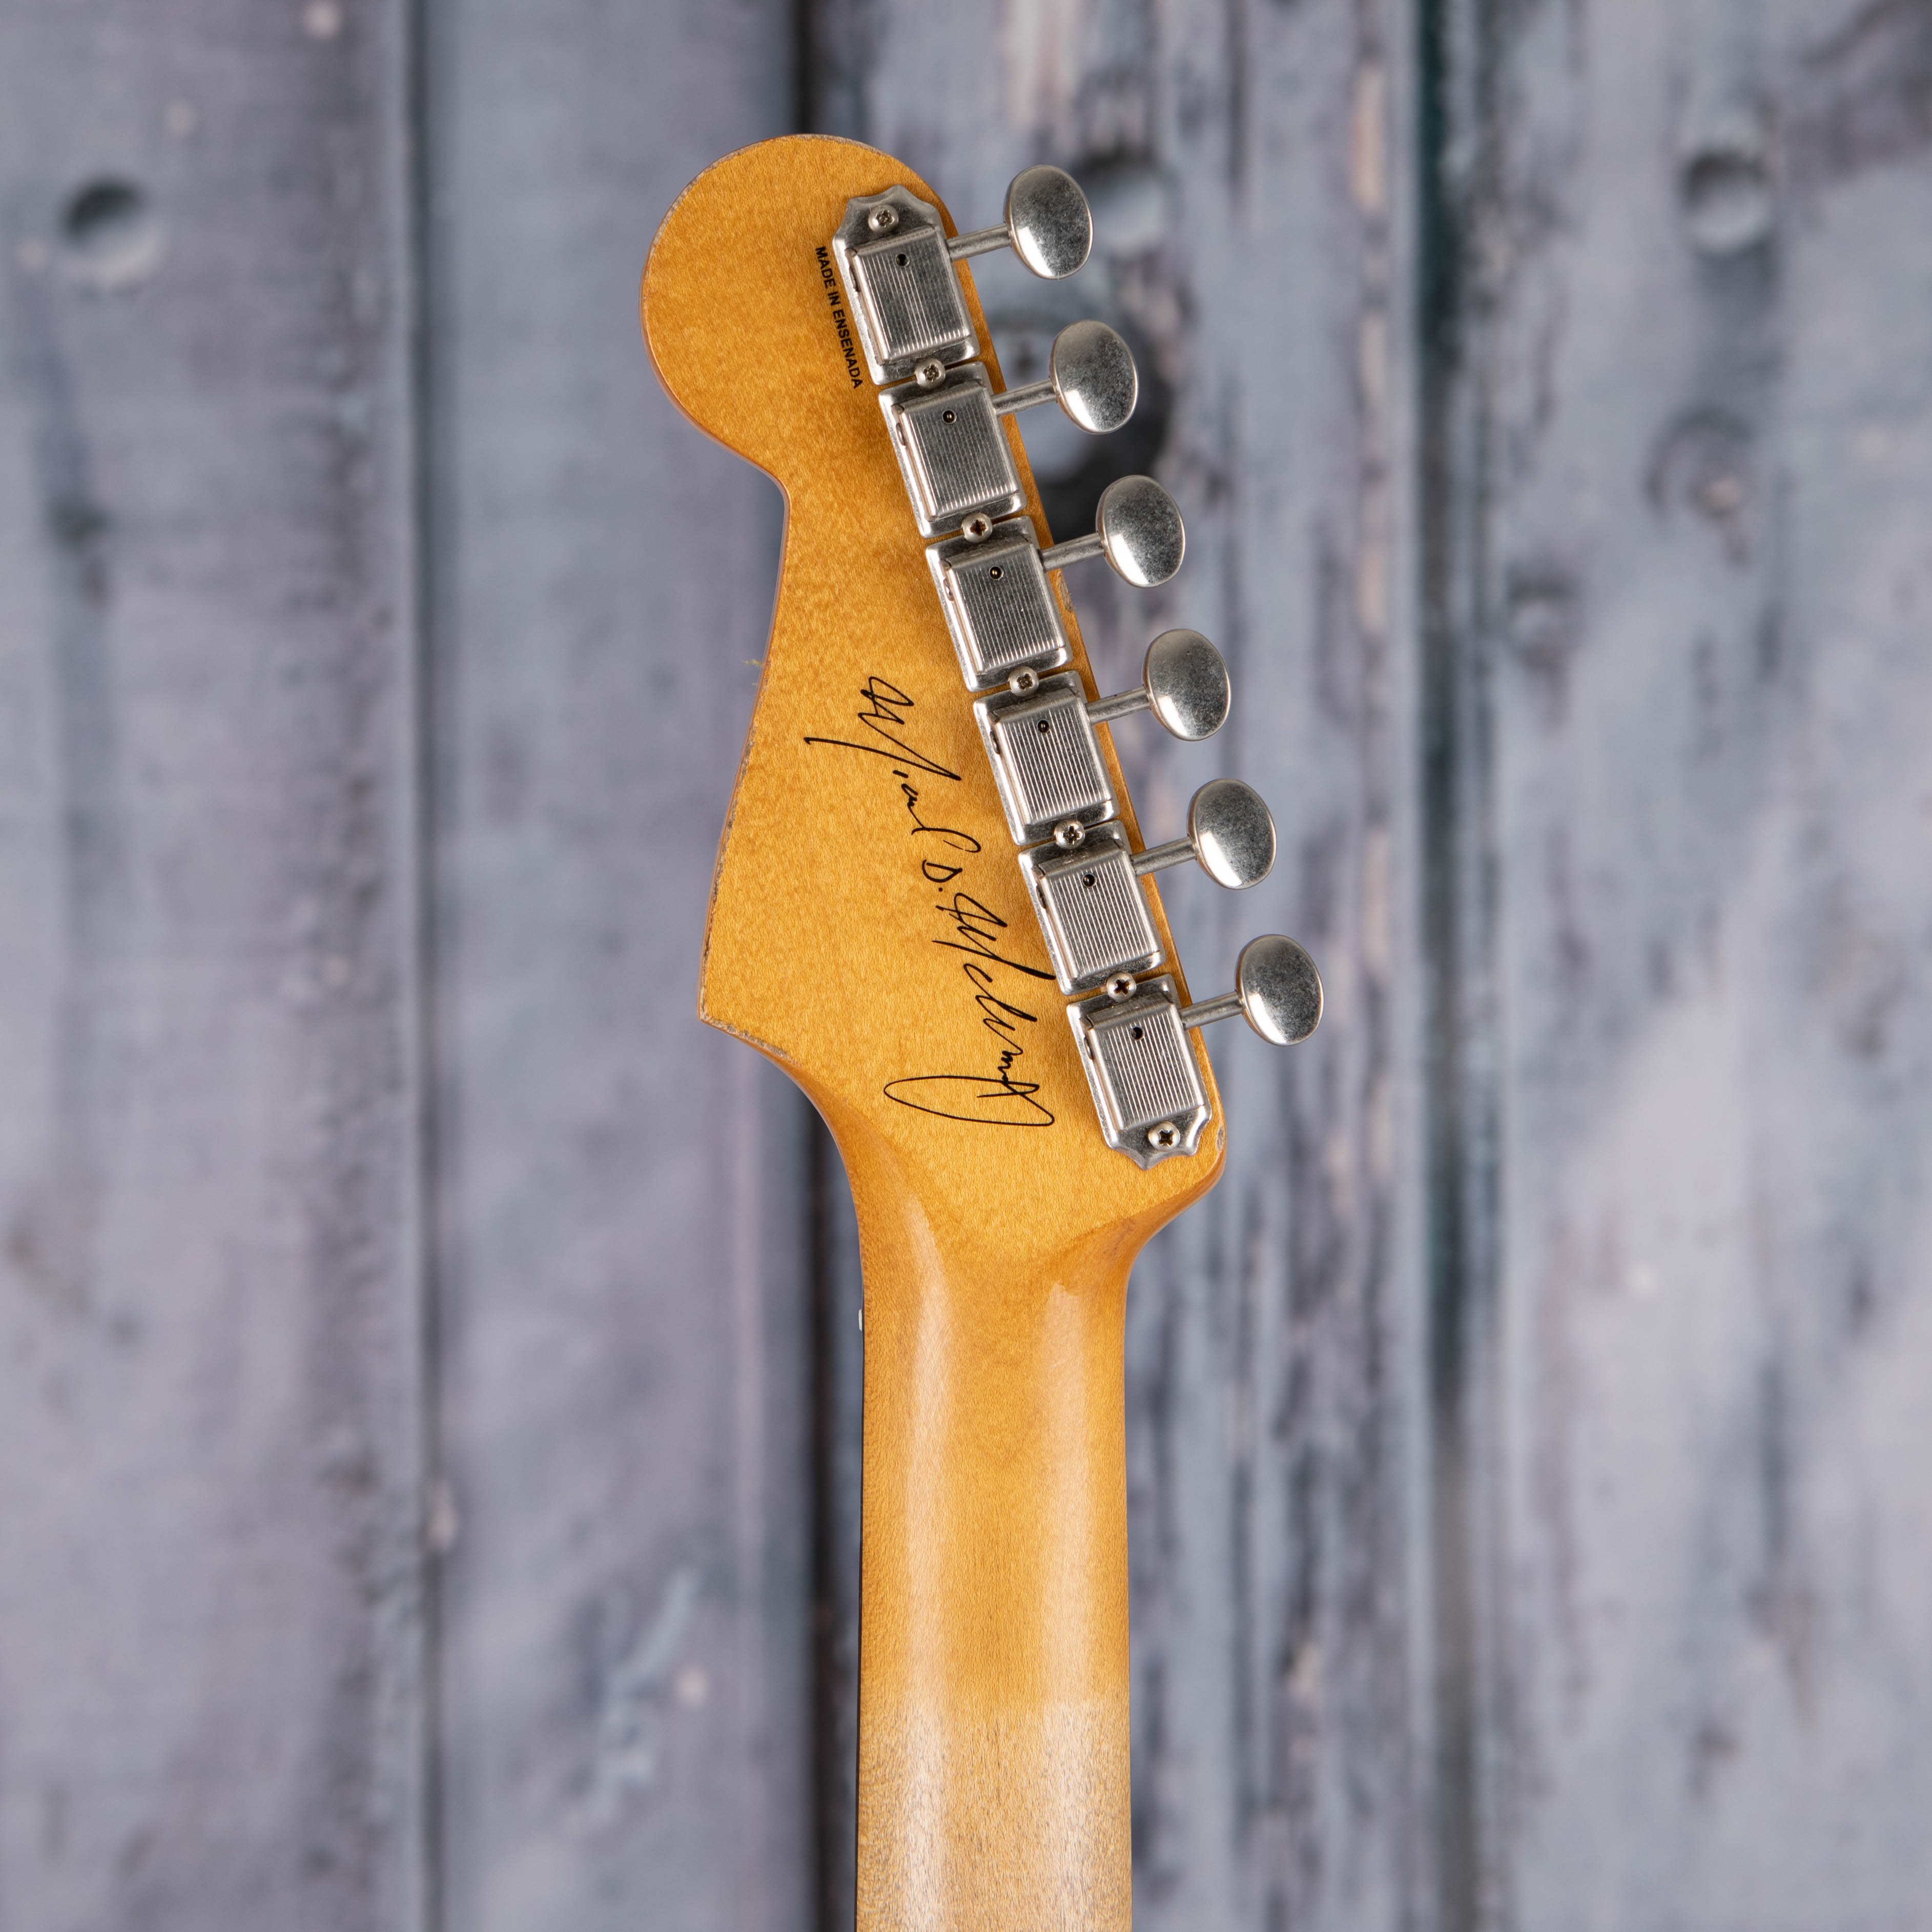 Fender Mike McCready Stratocaster Electric Guitar, 3-Color Sunburst, back headstock